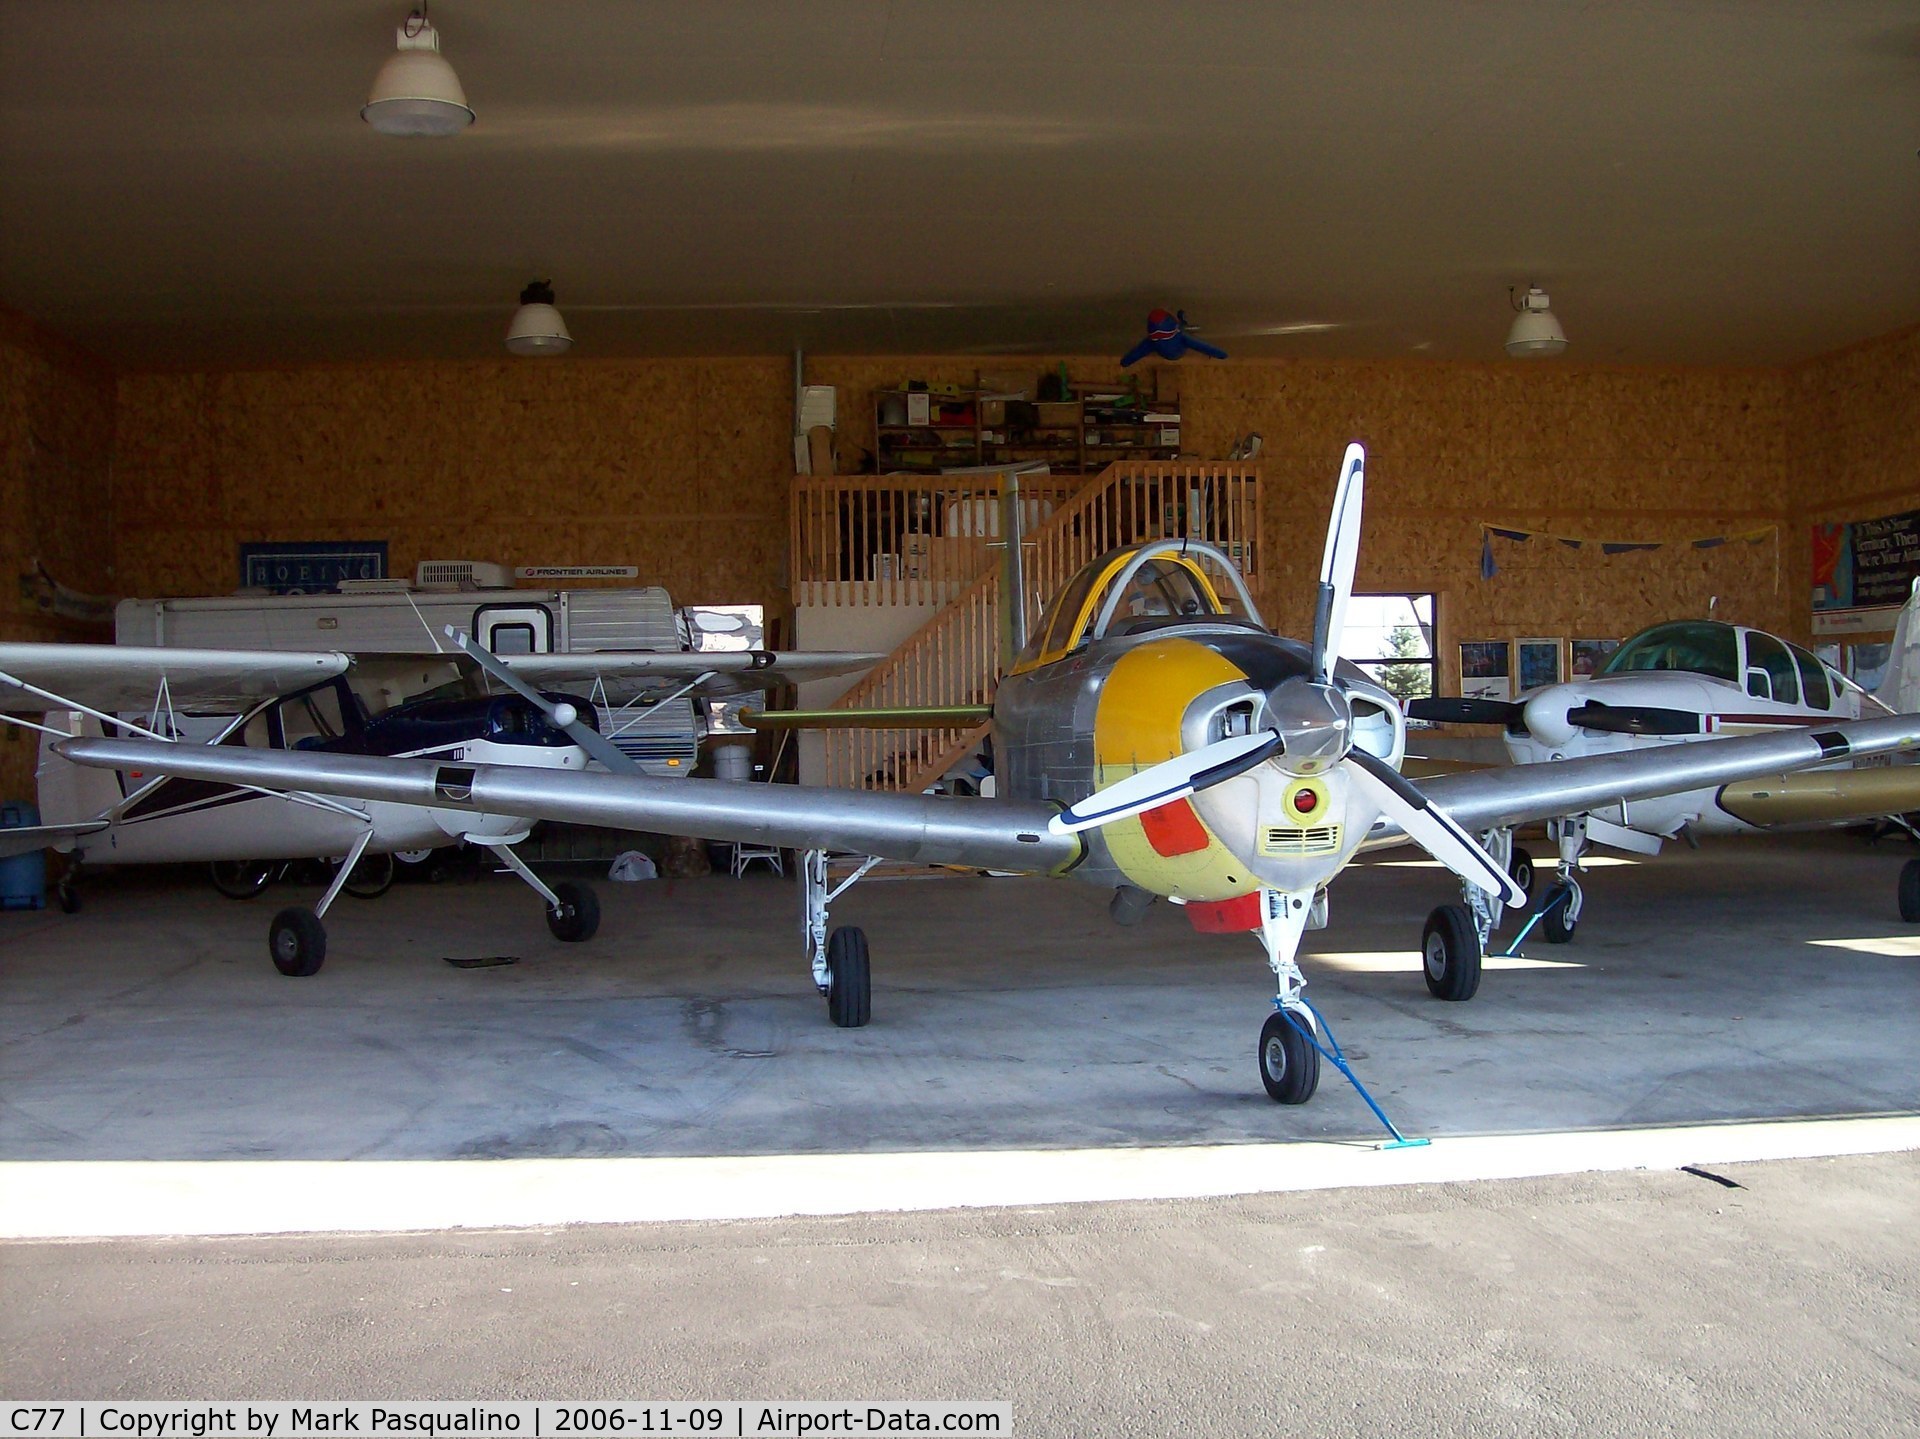 Poplar Grove Airport (C77) - Hangar built for three